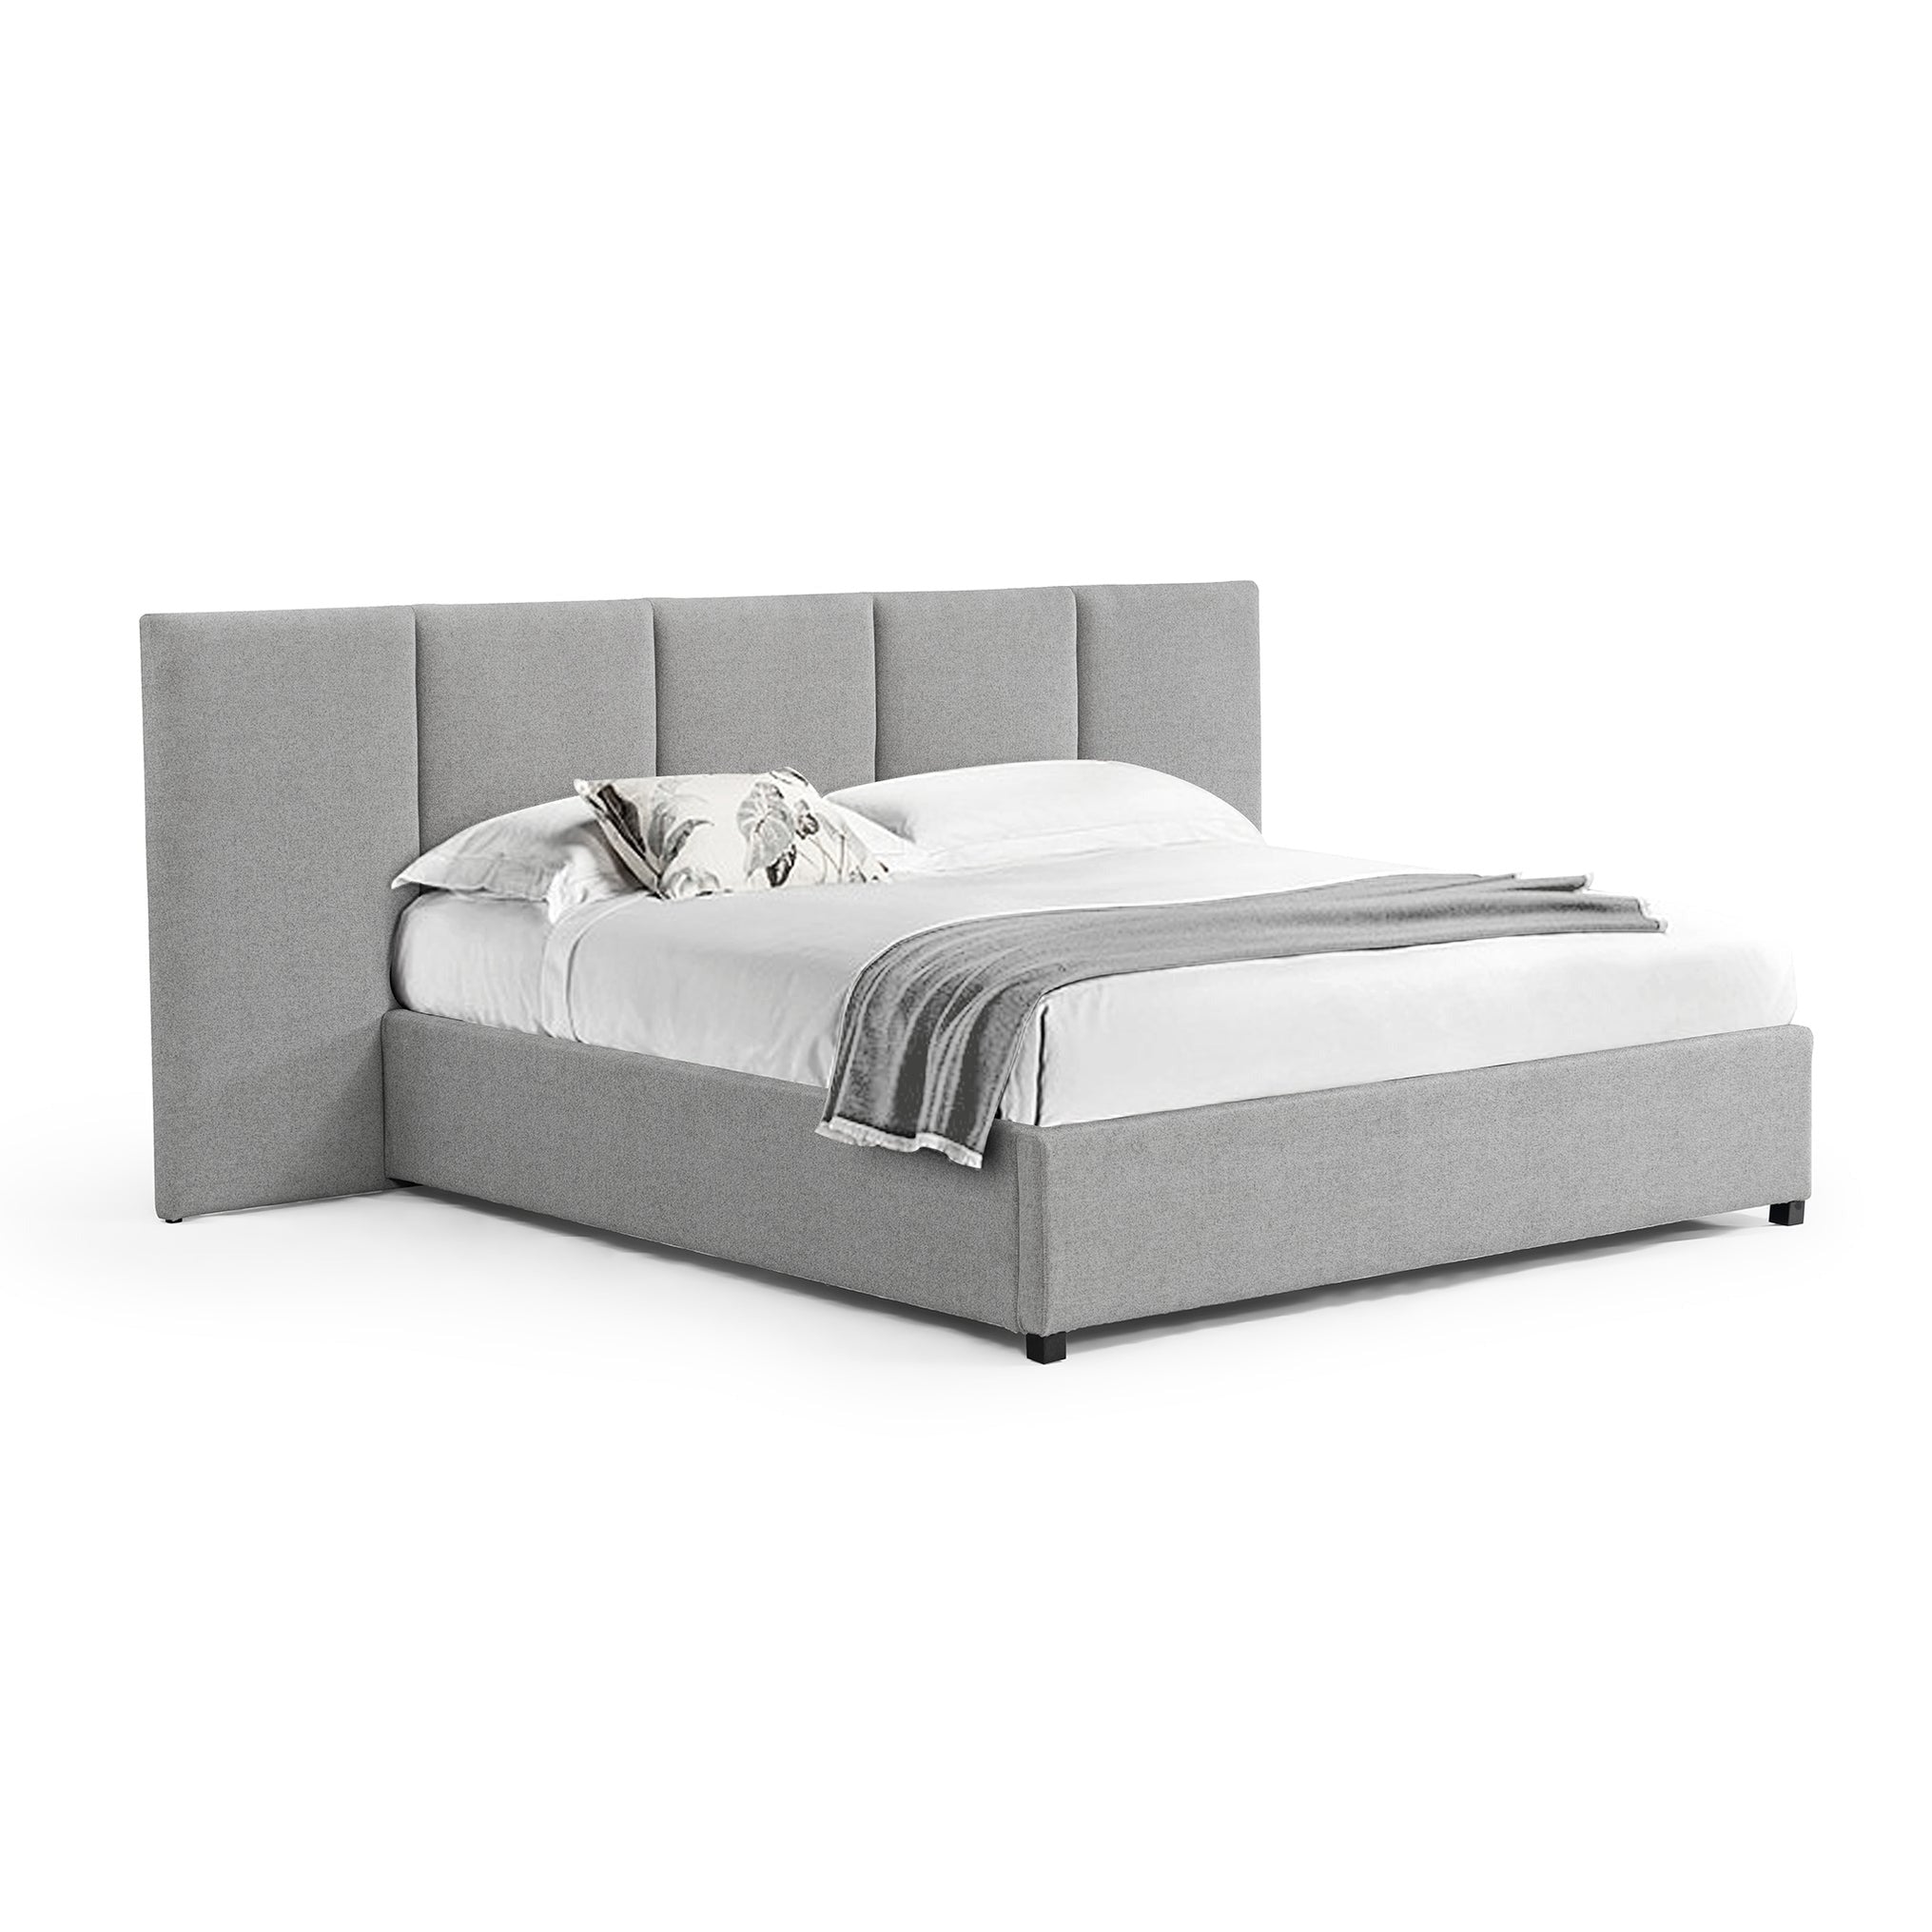 Amado King Sized Bed Frame - Spec Grey